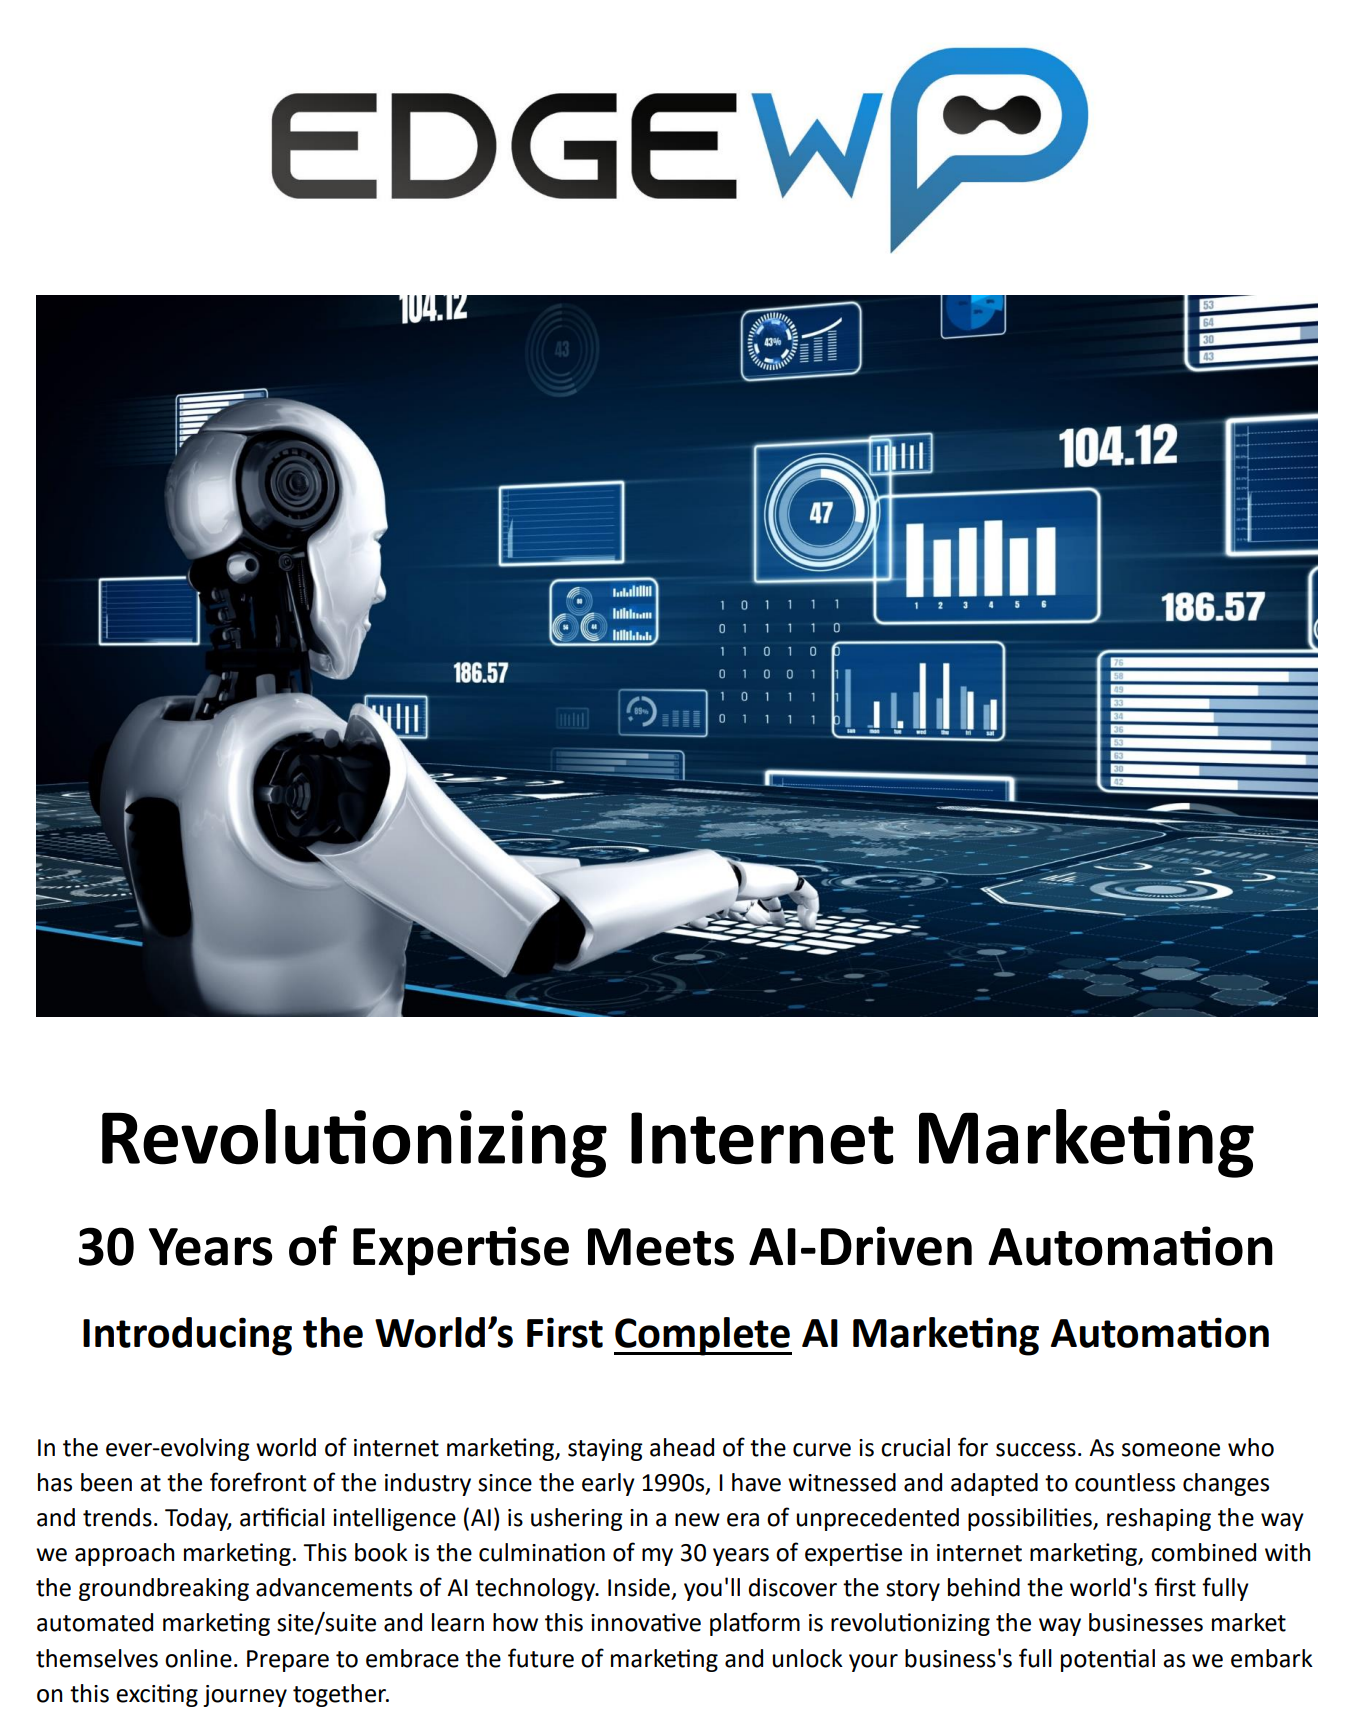 Revolutionizing Internet Marketing With AI